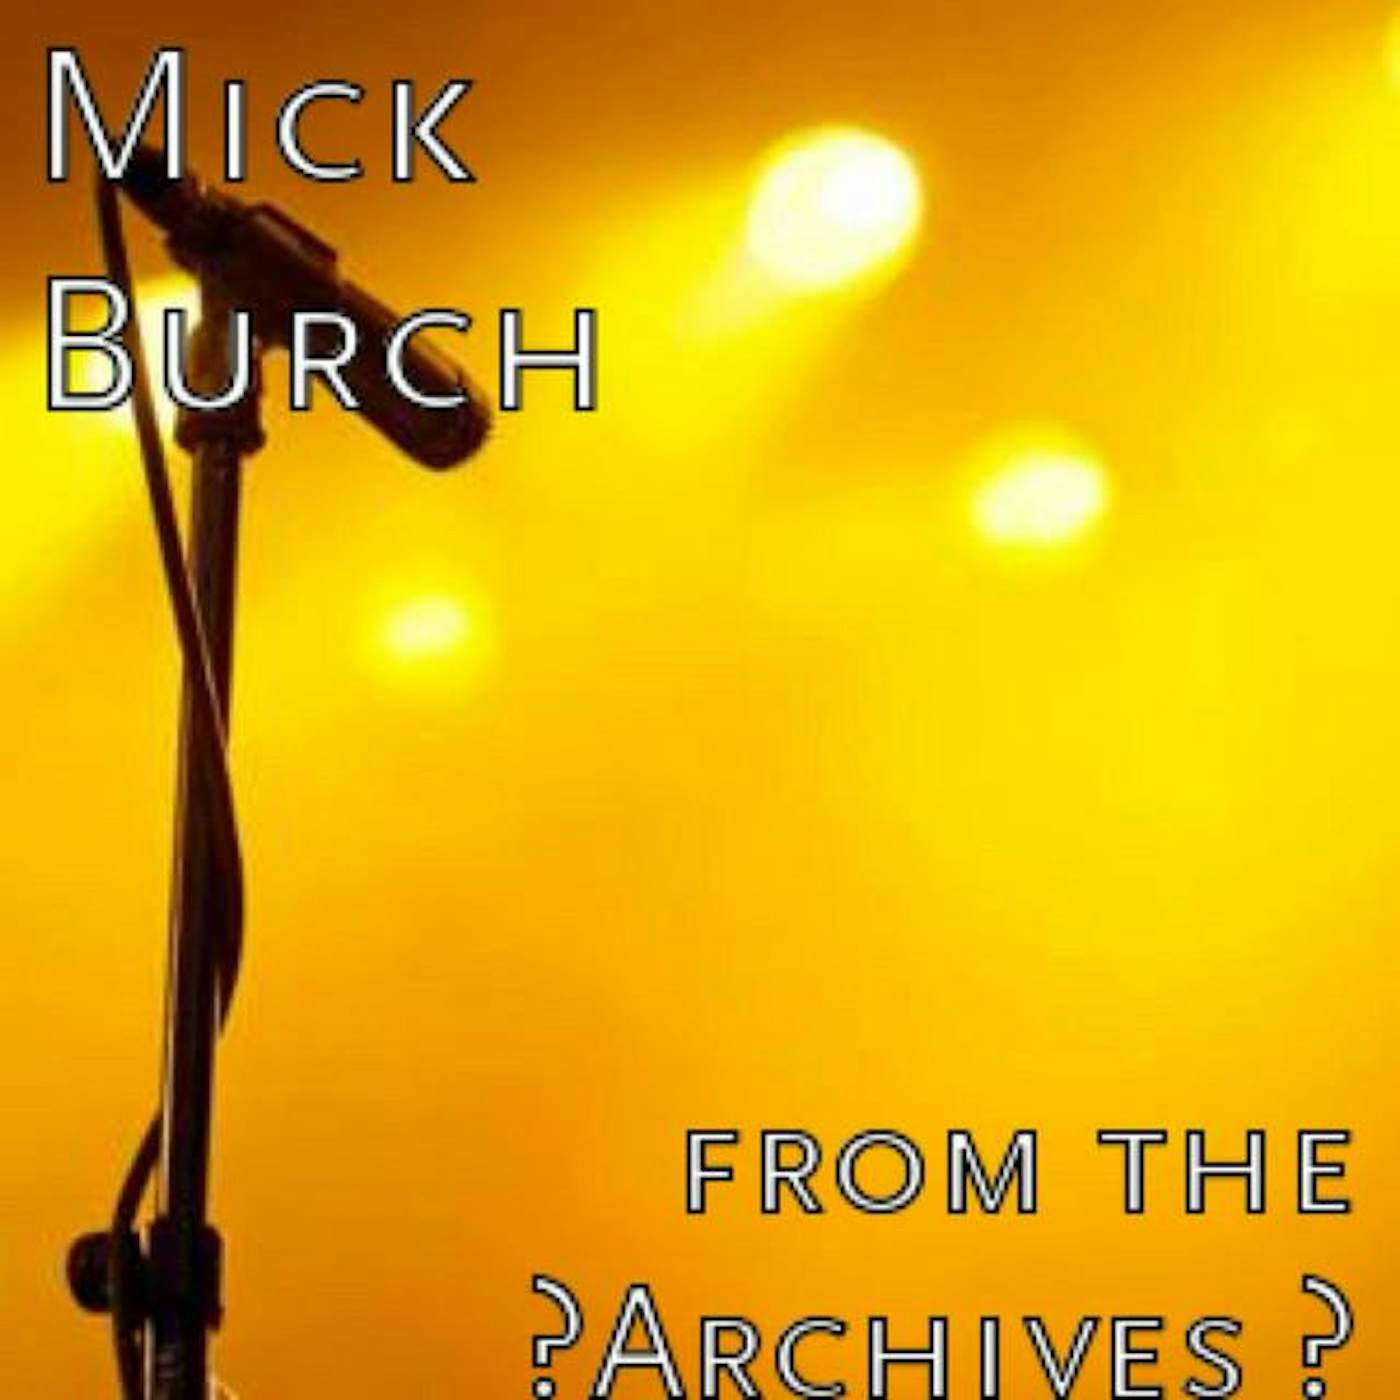 Mick Burch